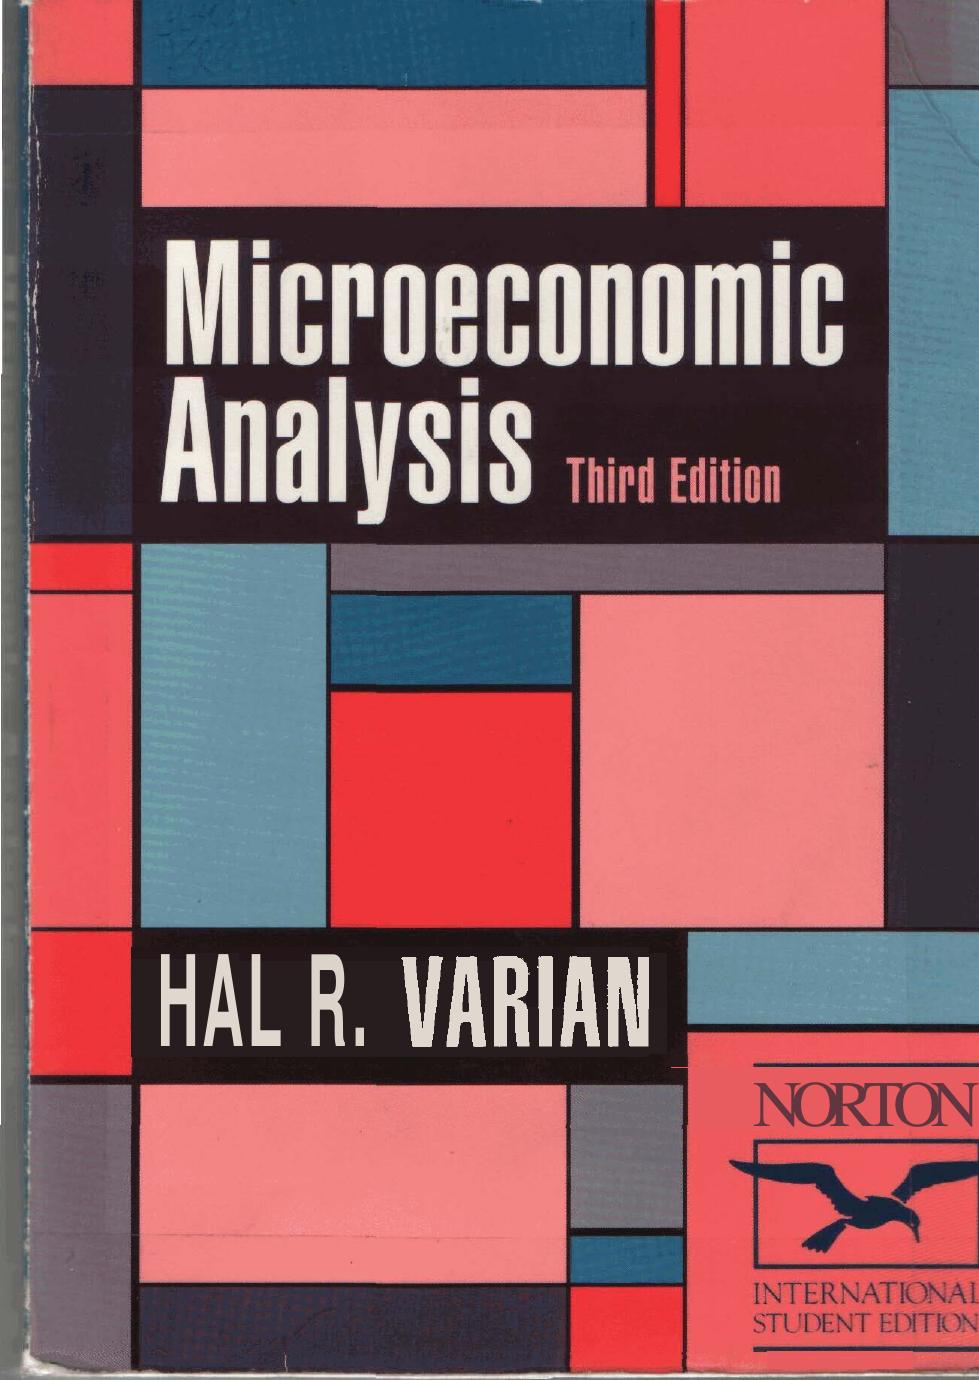 Varian  Microeconomic Analysis, 3rd. Ed. 1978